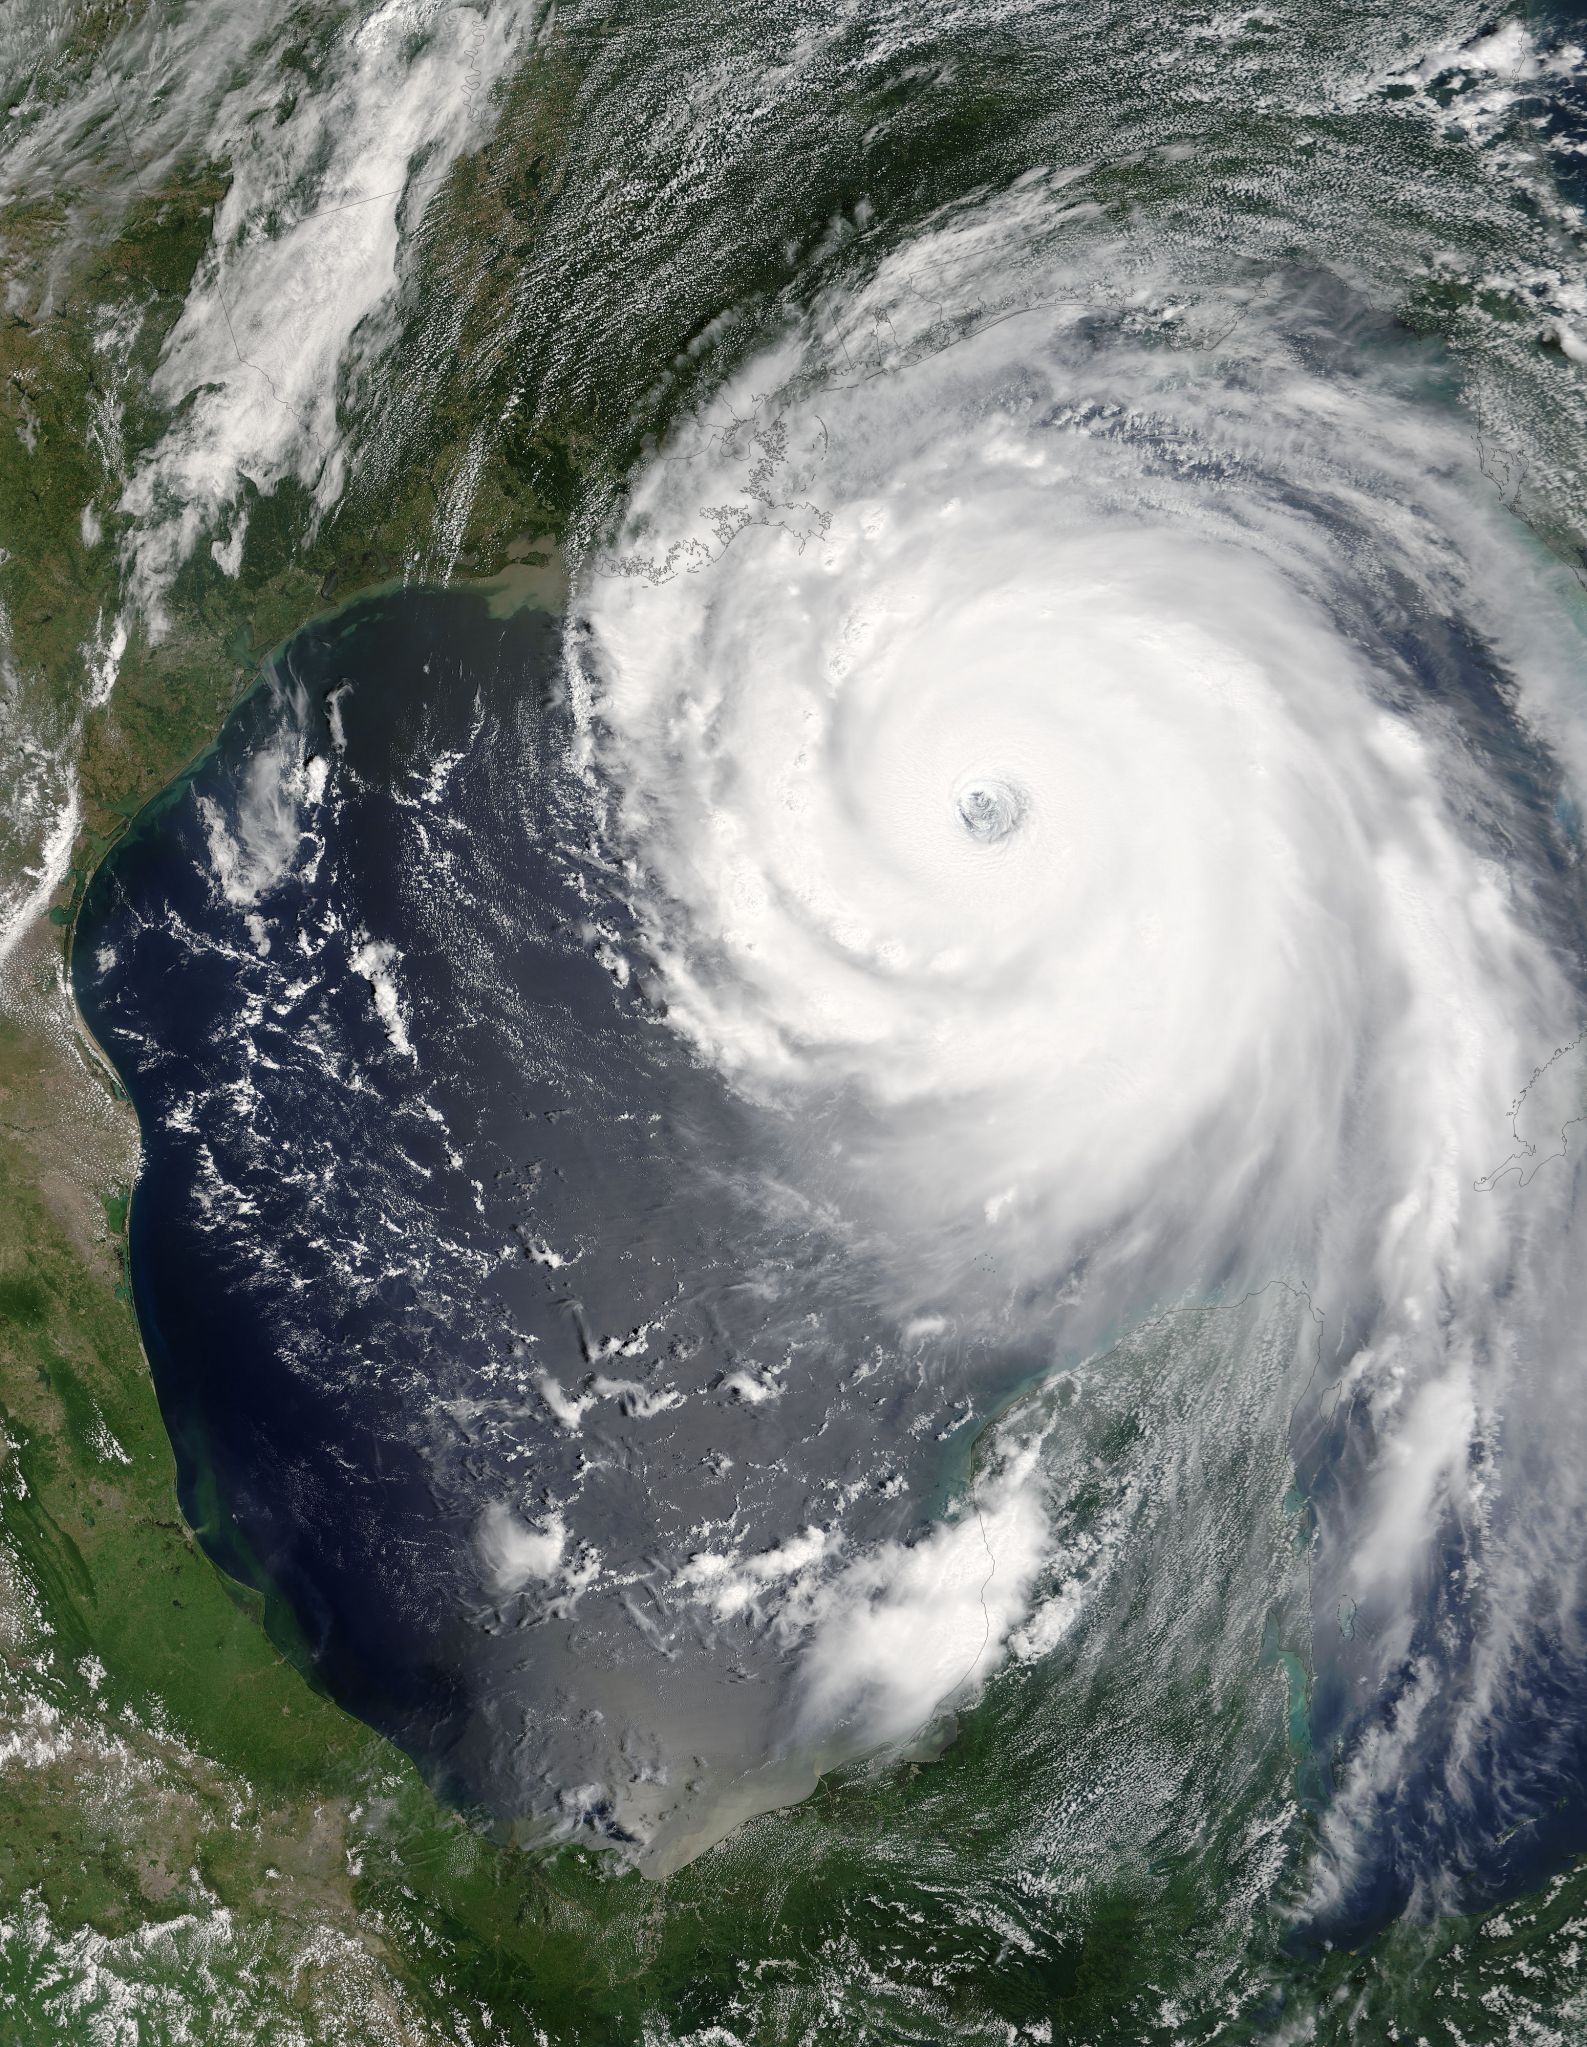 full-color image of hurricane katrina from satellite